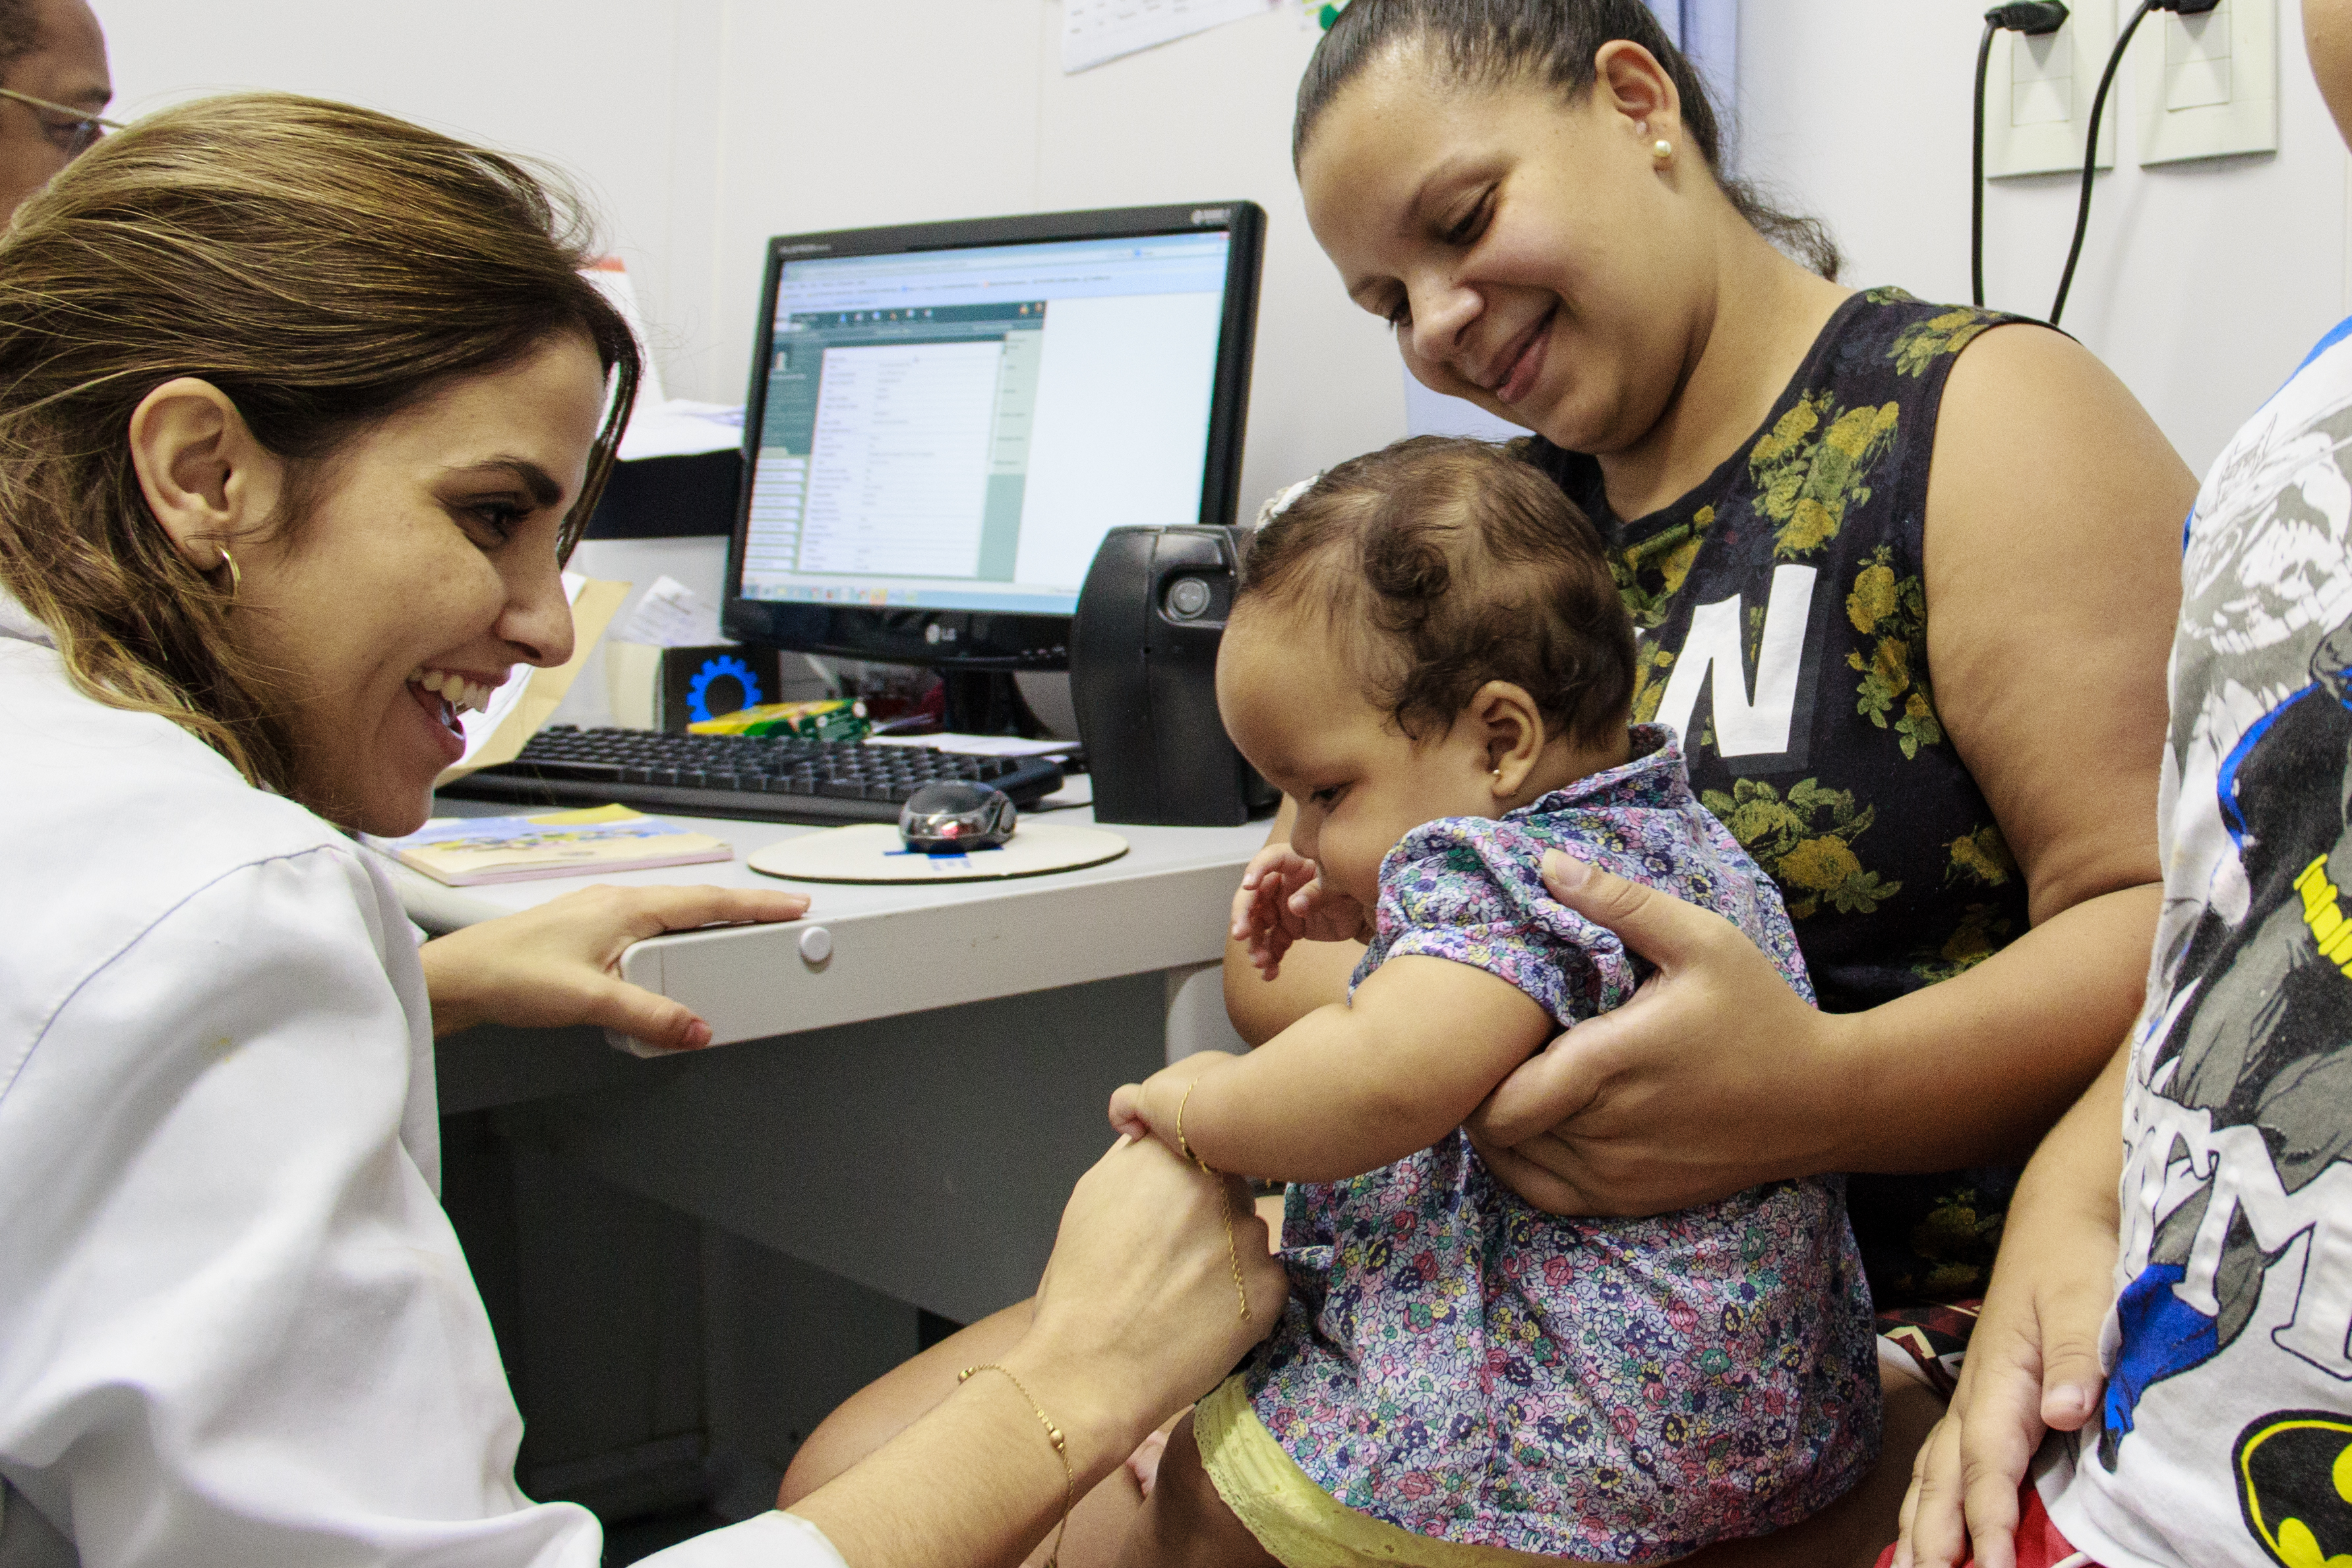 Centro de saúde Tamires Barcelos, administrado pelo Viva Rio